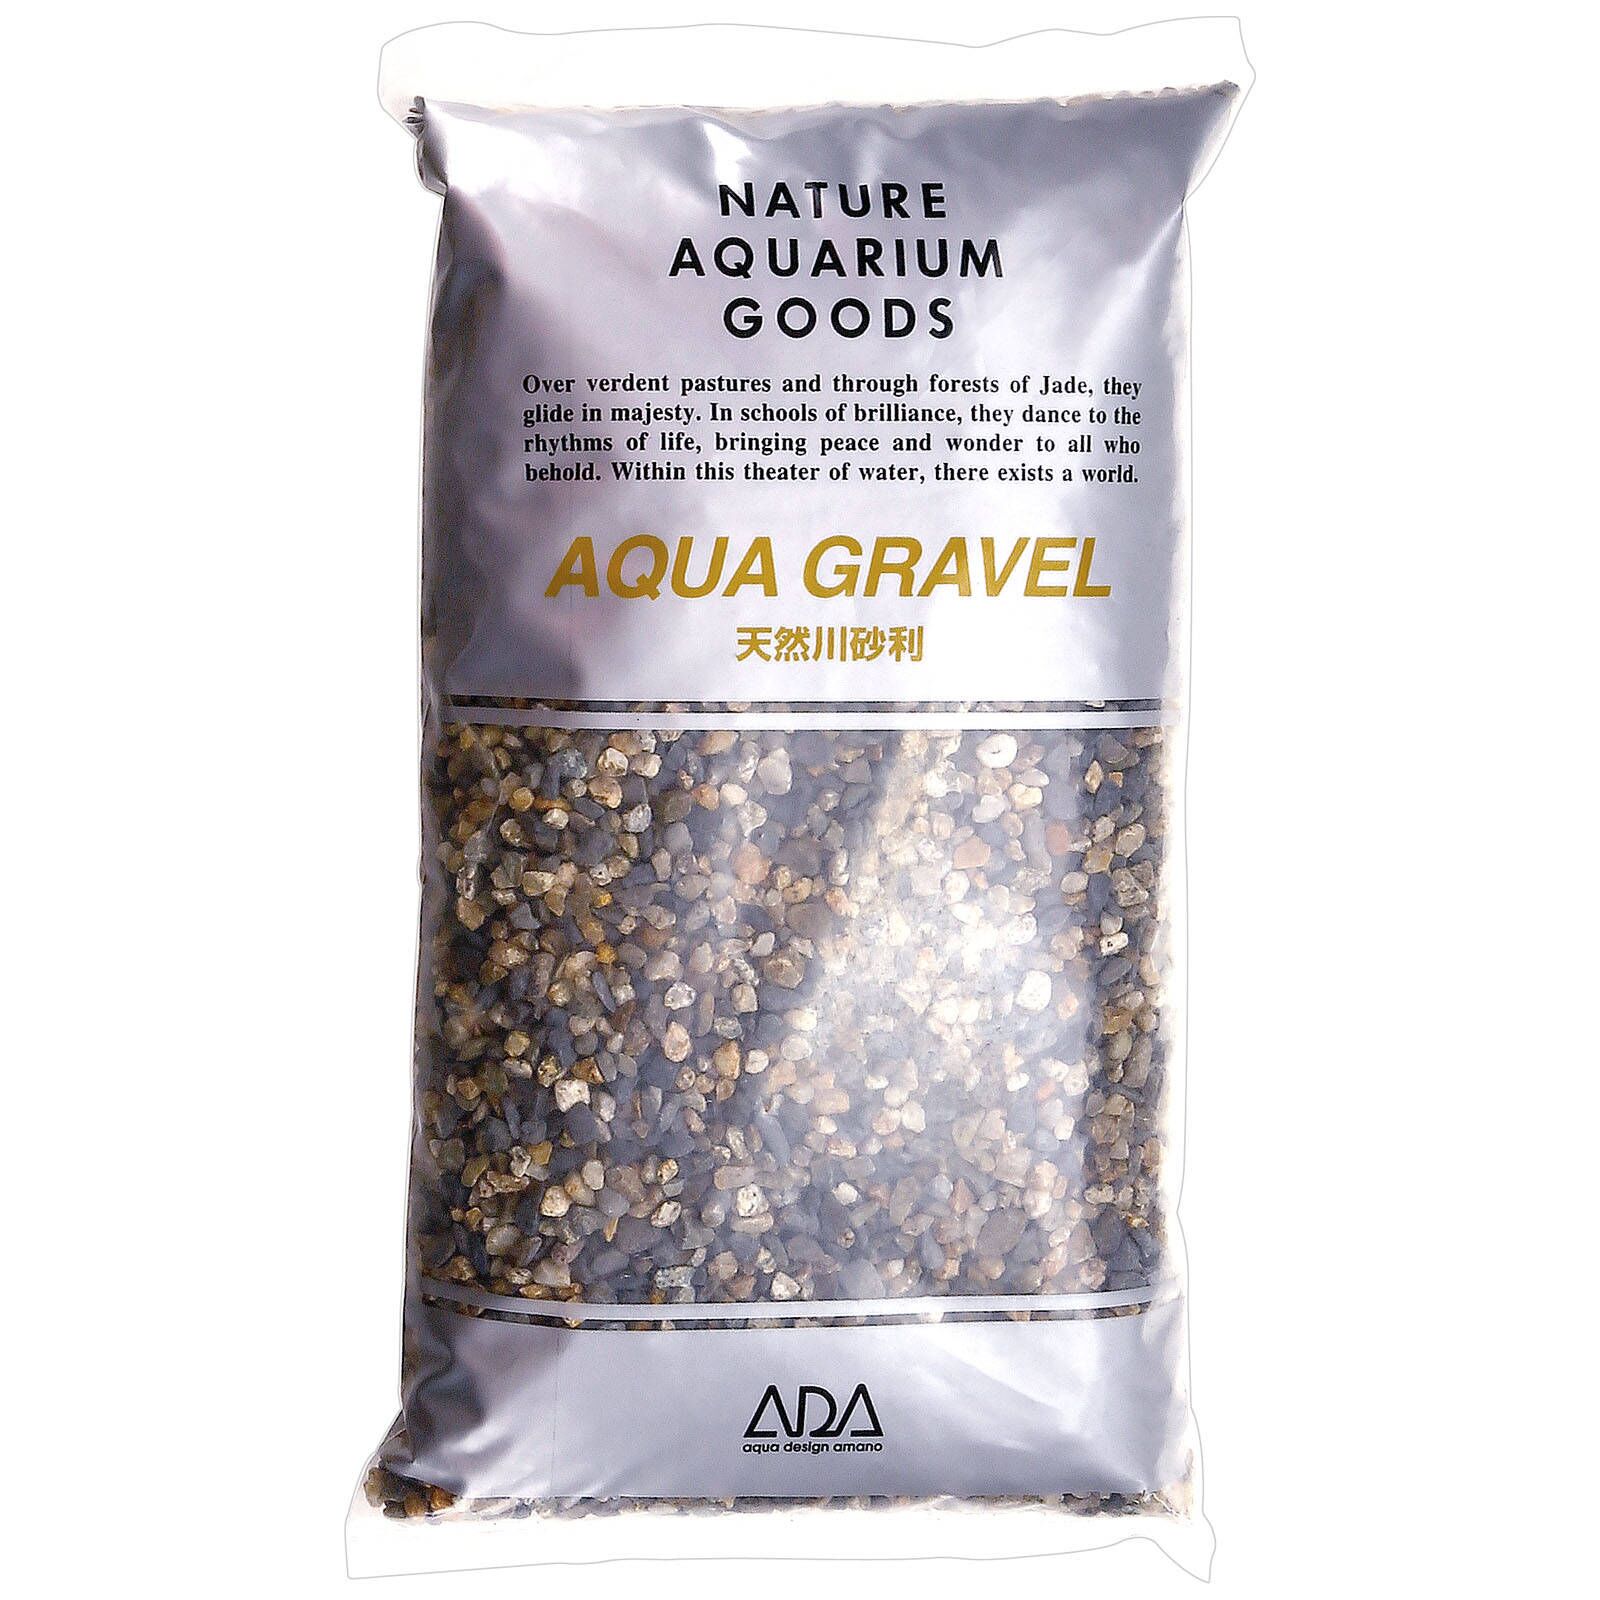 ADA - Aqua Gravel S